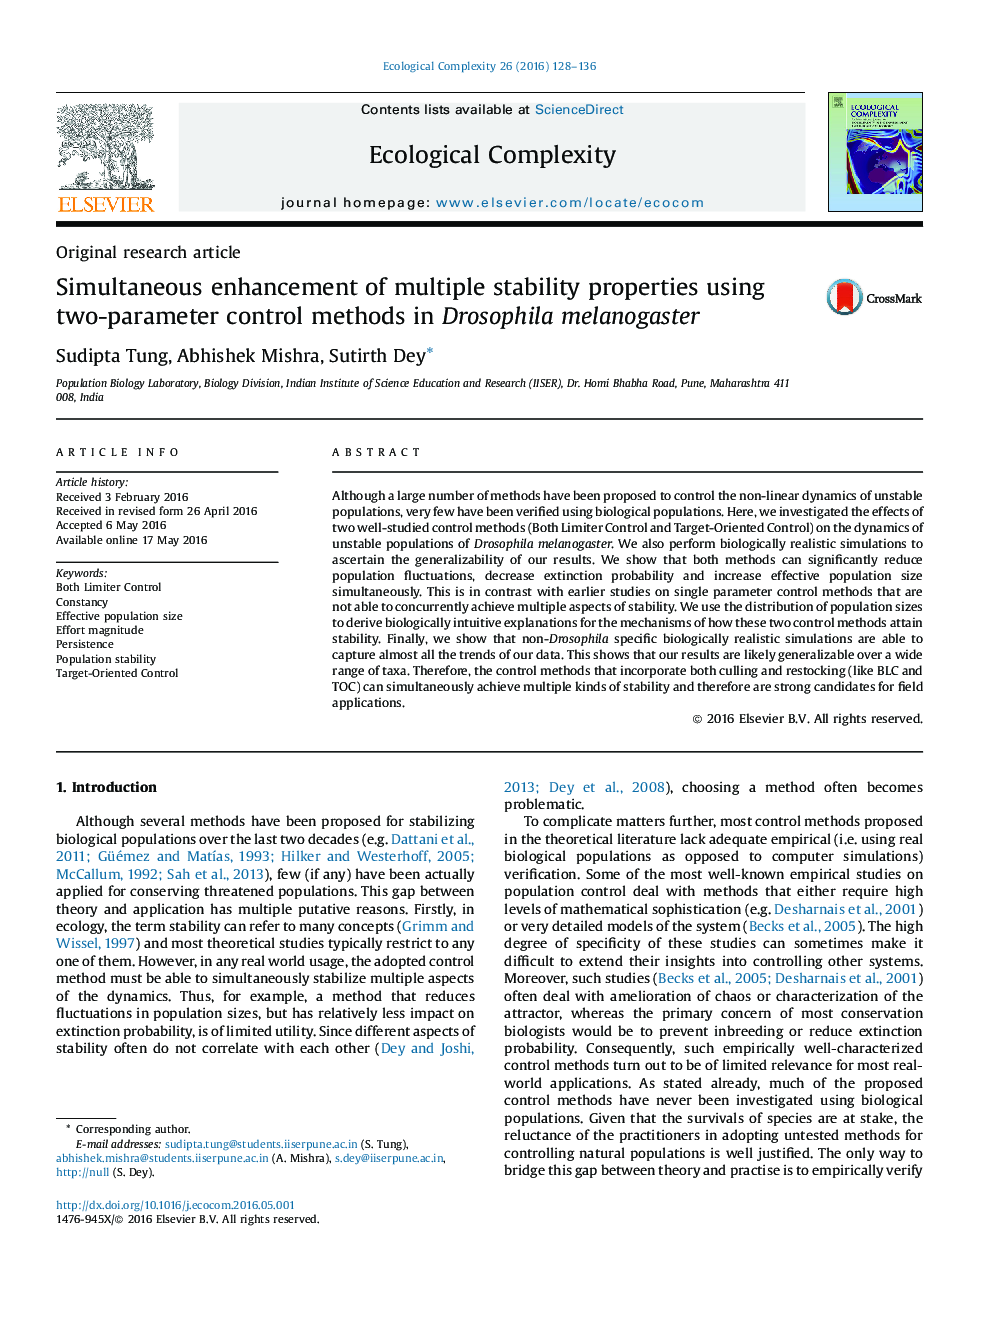 Simultaneous enhancement of multiple stability properties using two-parameter control methods in Drosophila melanogaster